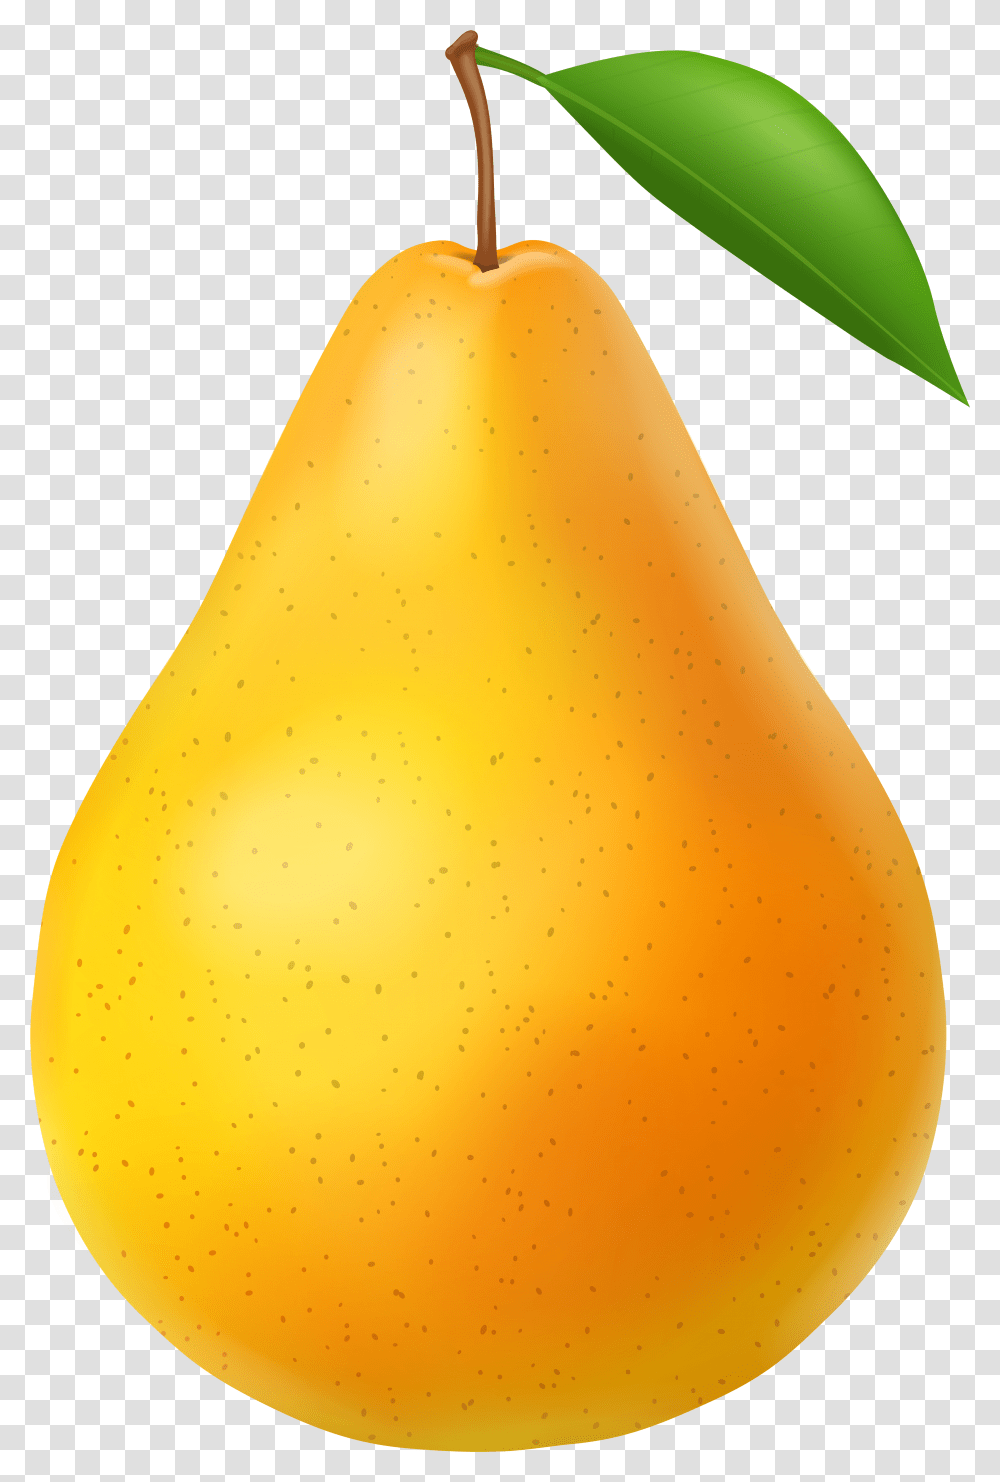 Pear Image Pear, Plant, Fruit, Food, Banana Transparent Png